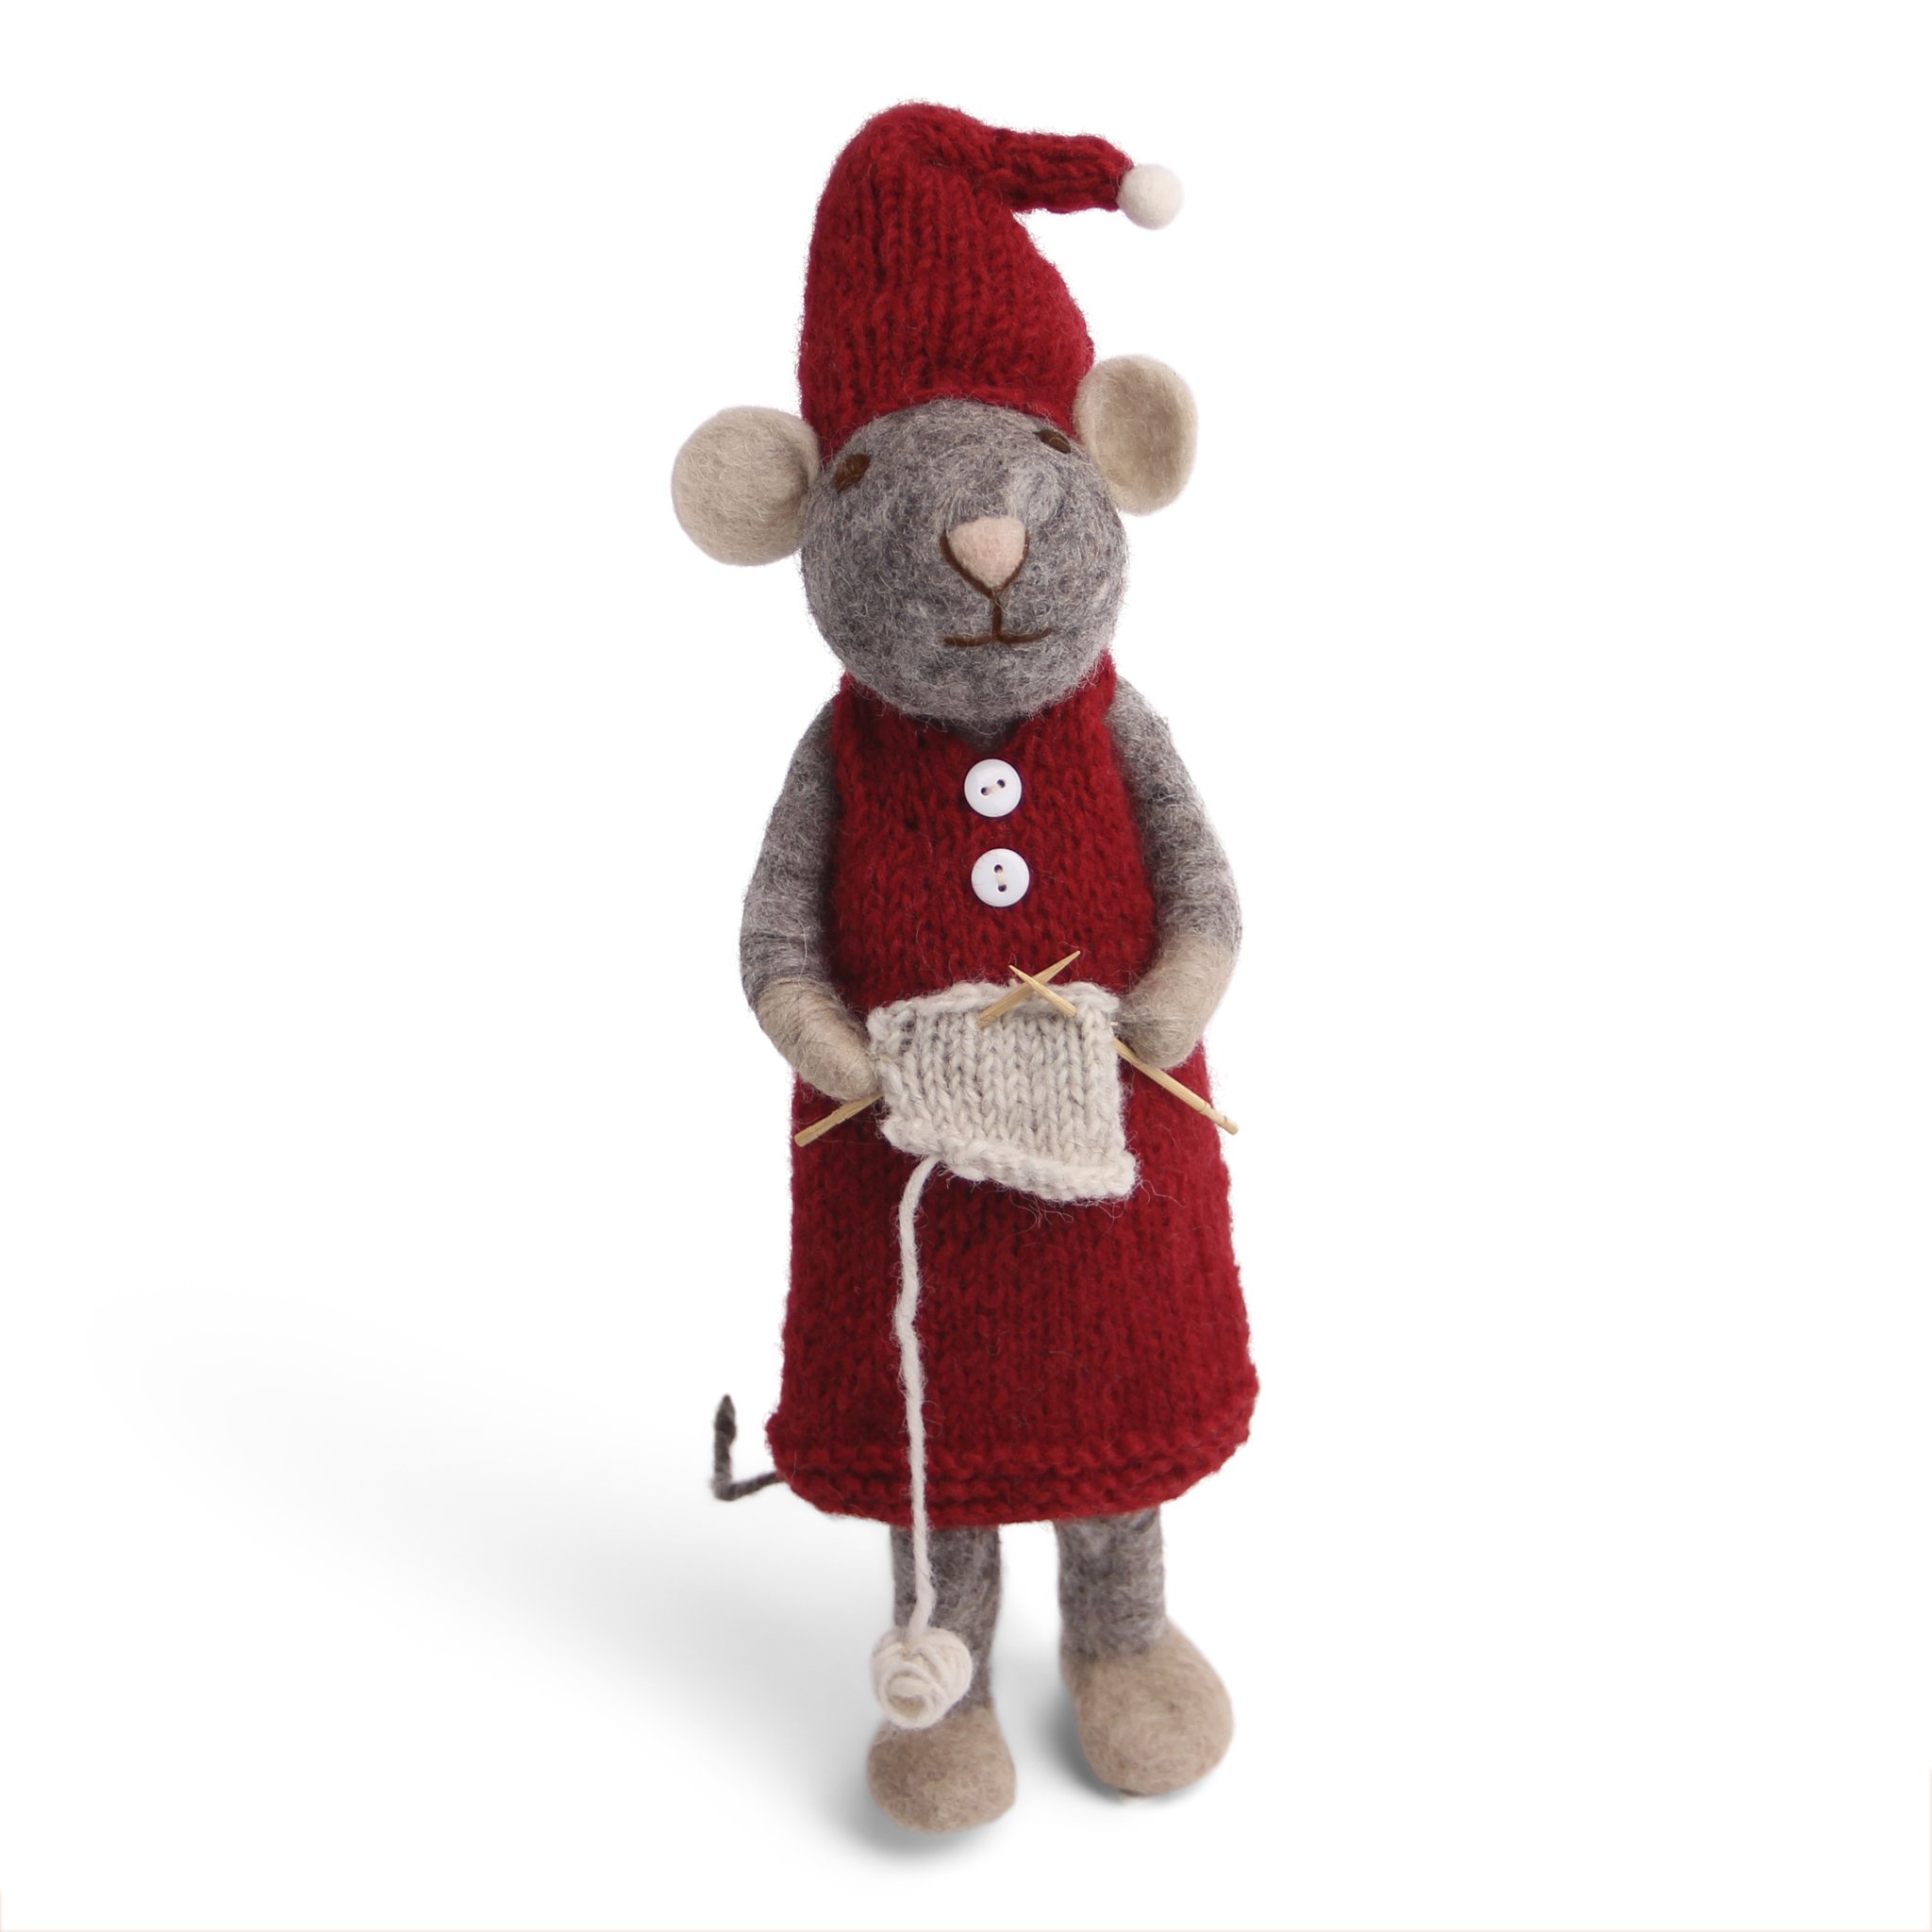 Filtet gr mus med rd kjole og strikketj fra Gry & Sif , Stor, 27 cm